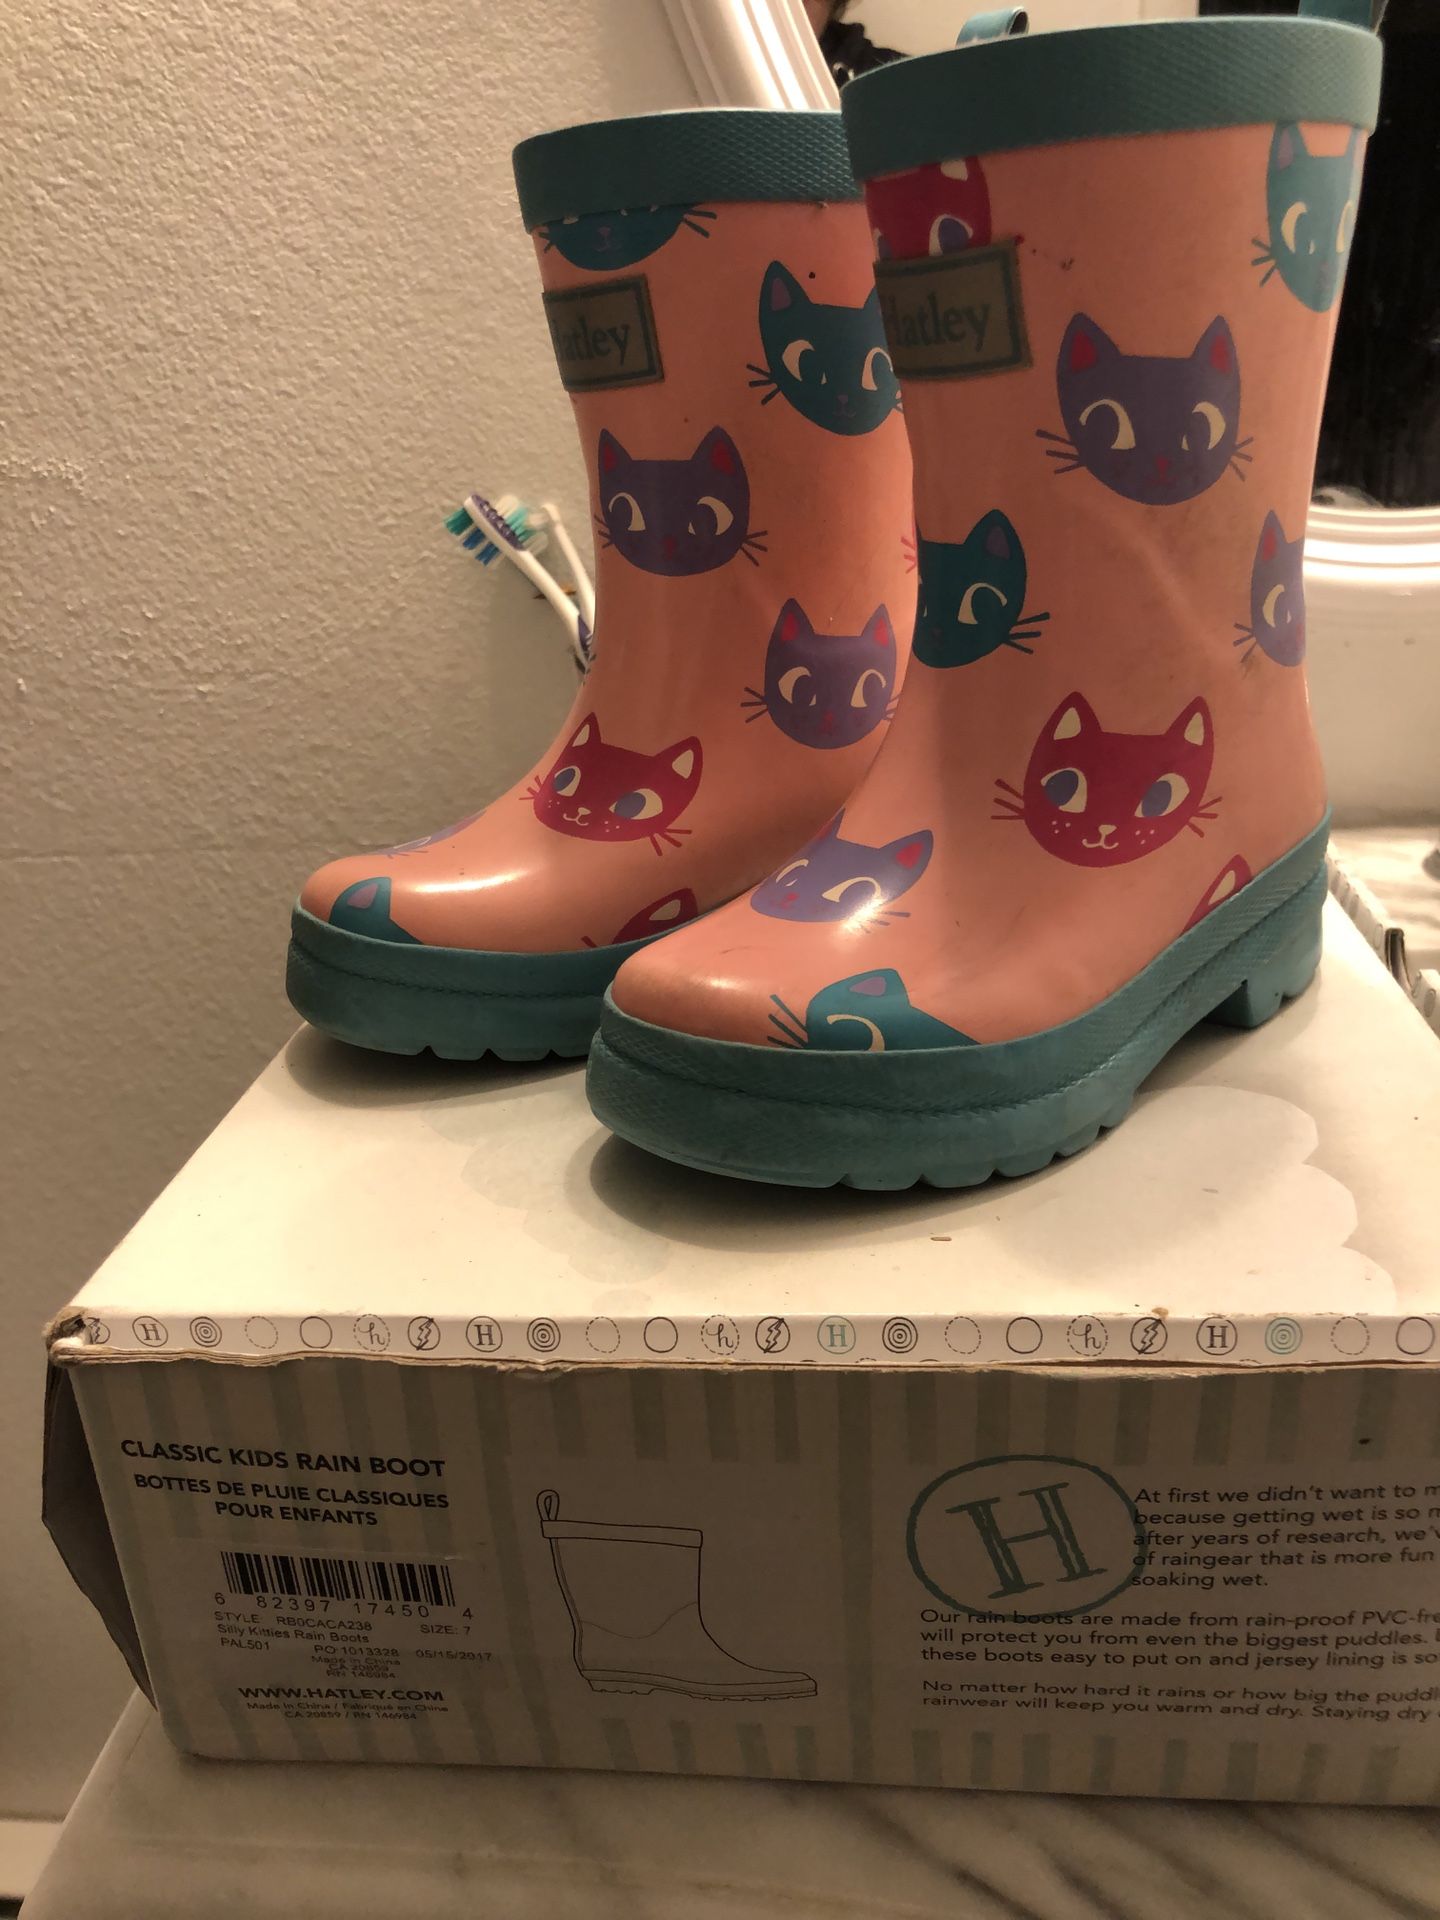 Cutest kitty rain boots ever